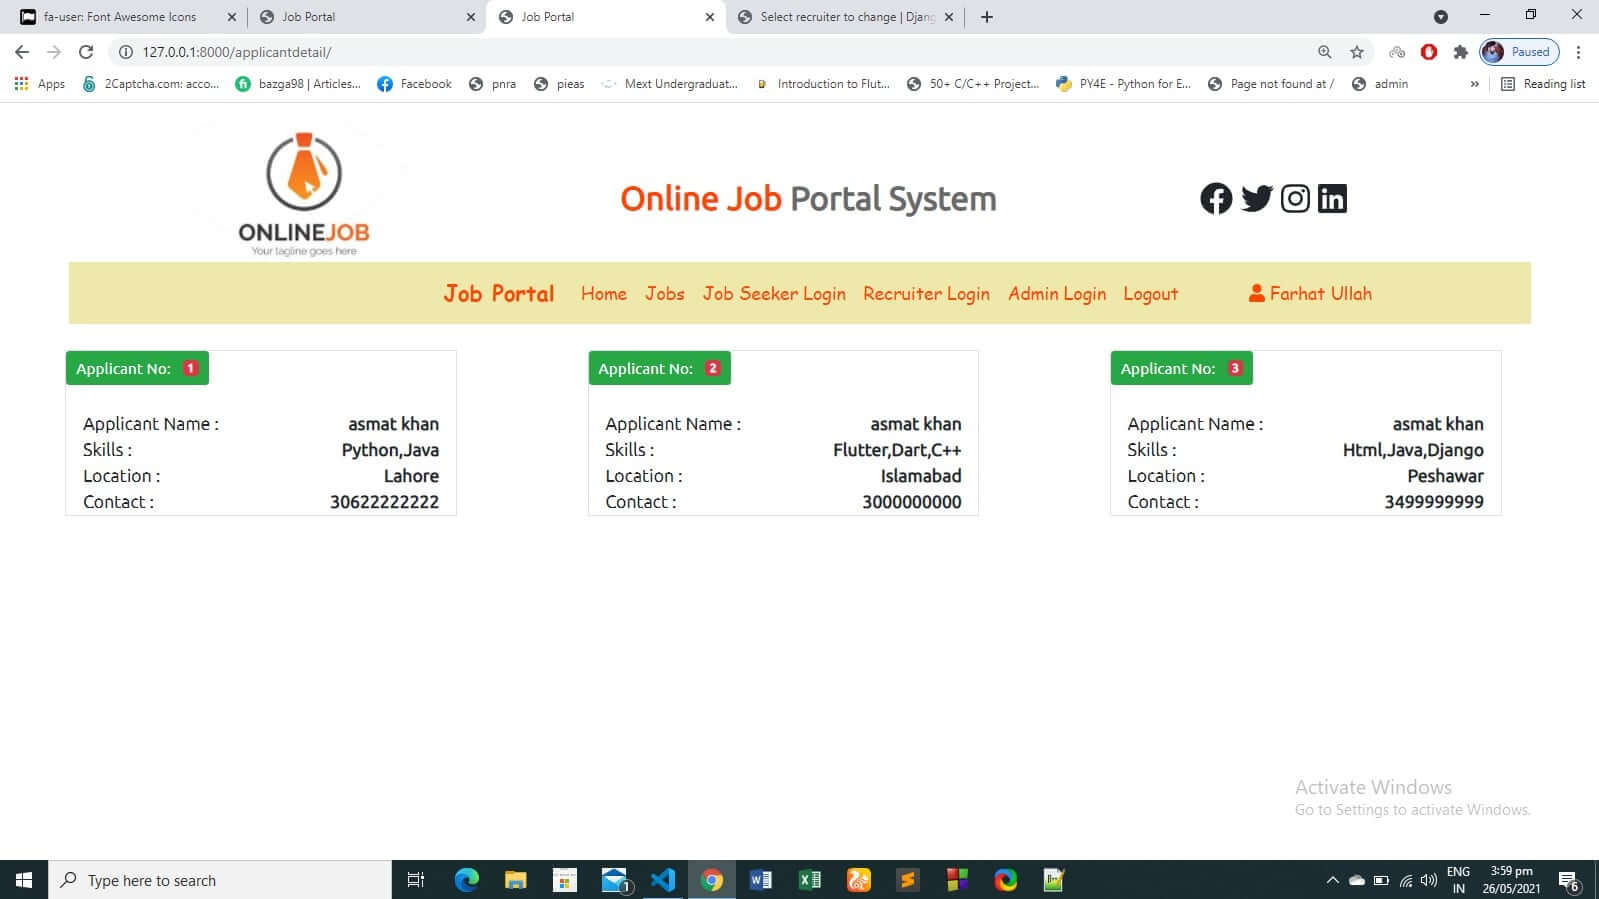 Online Job Portal System using Django Web Framework - Applicant Details